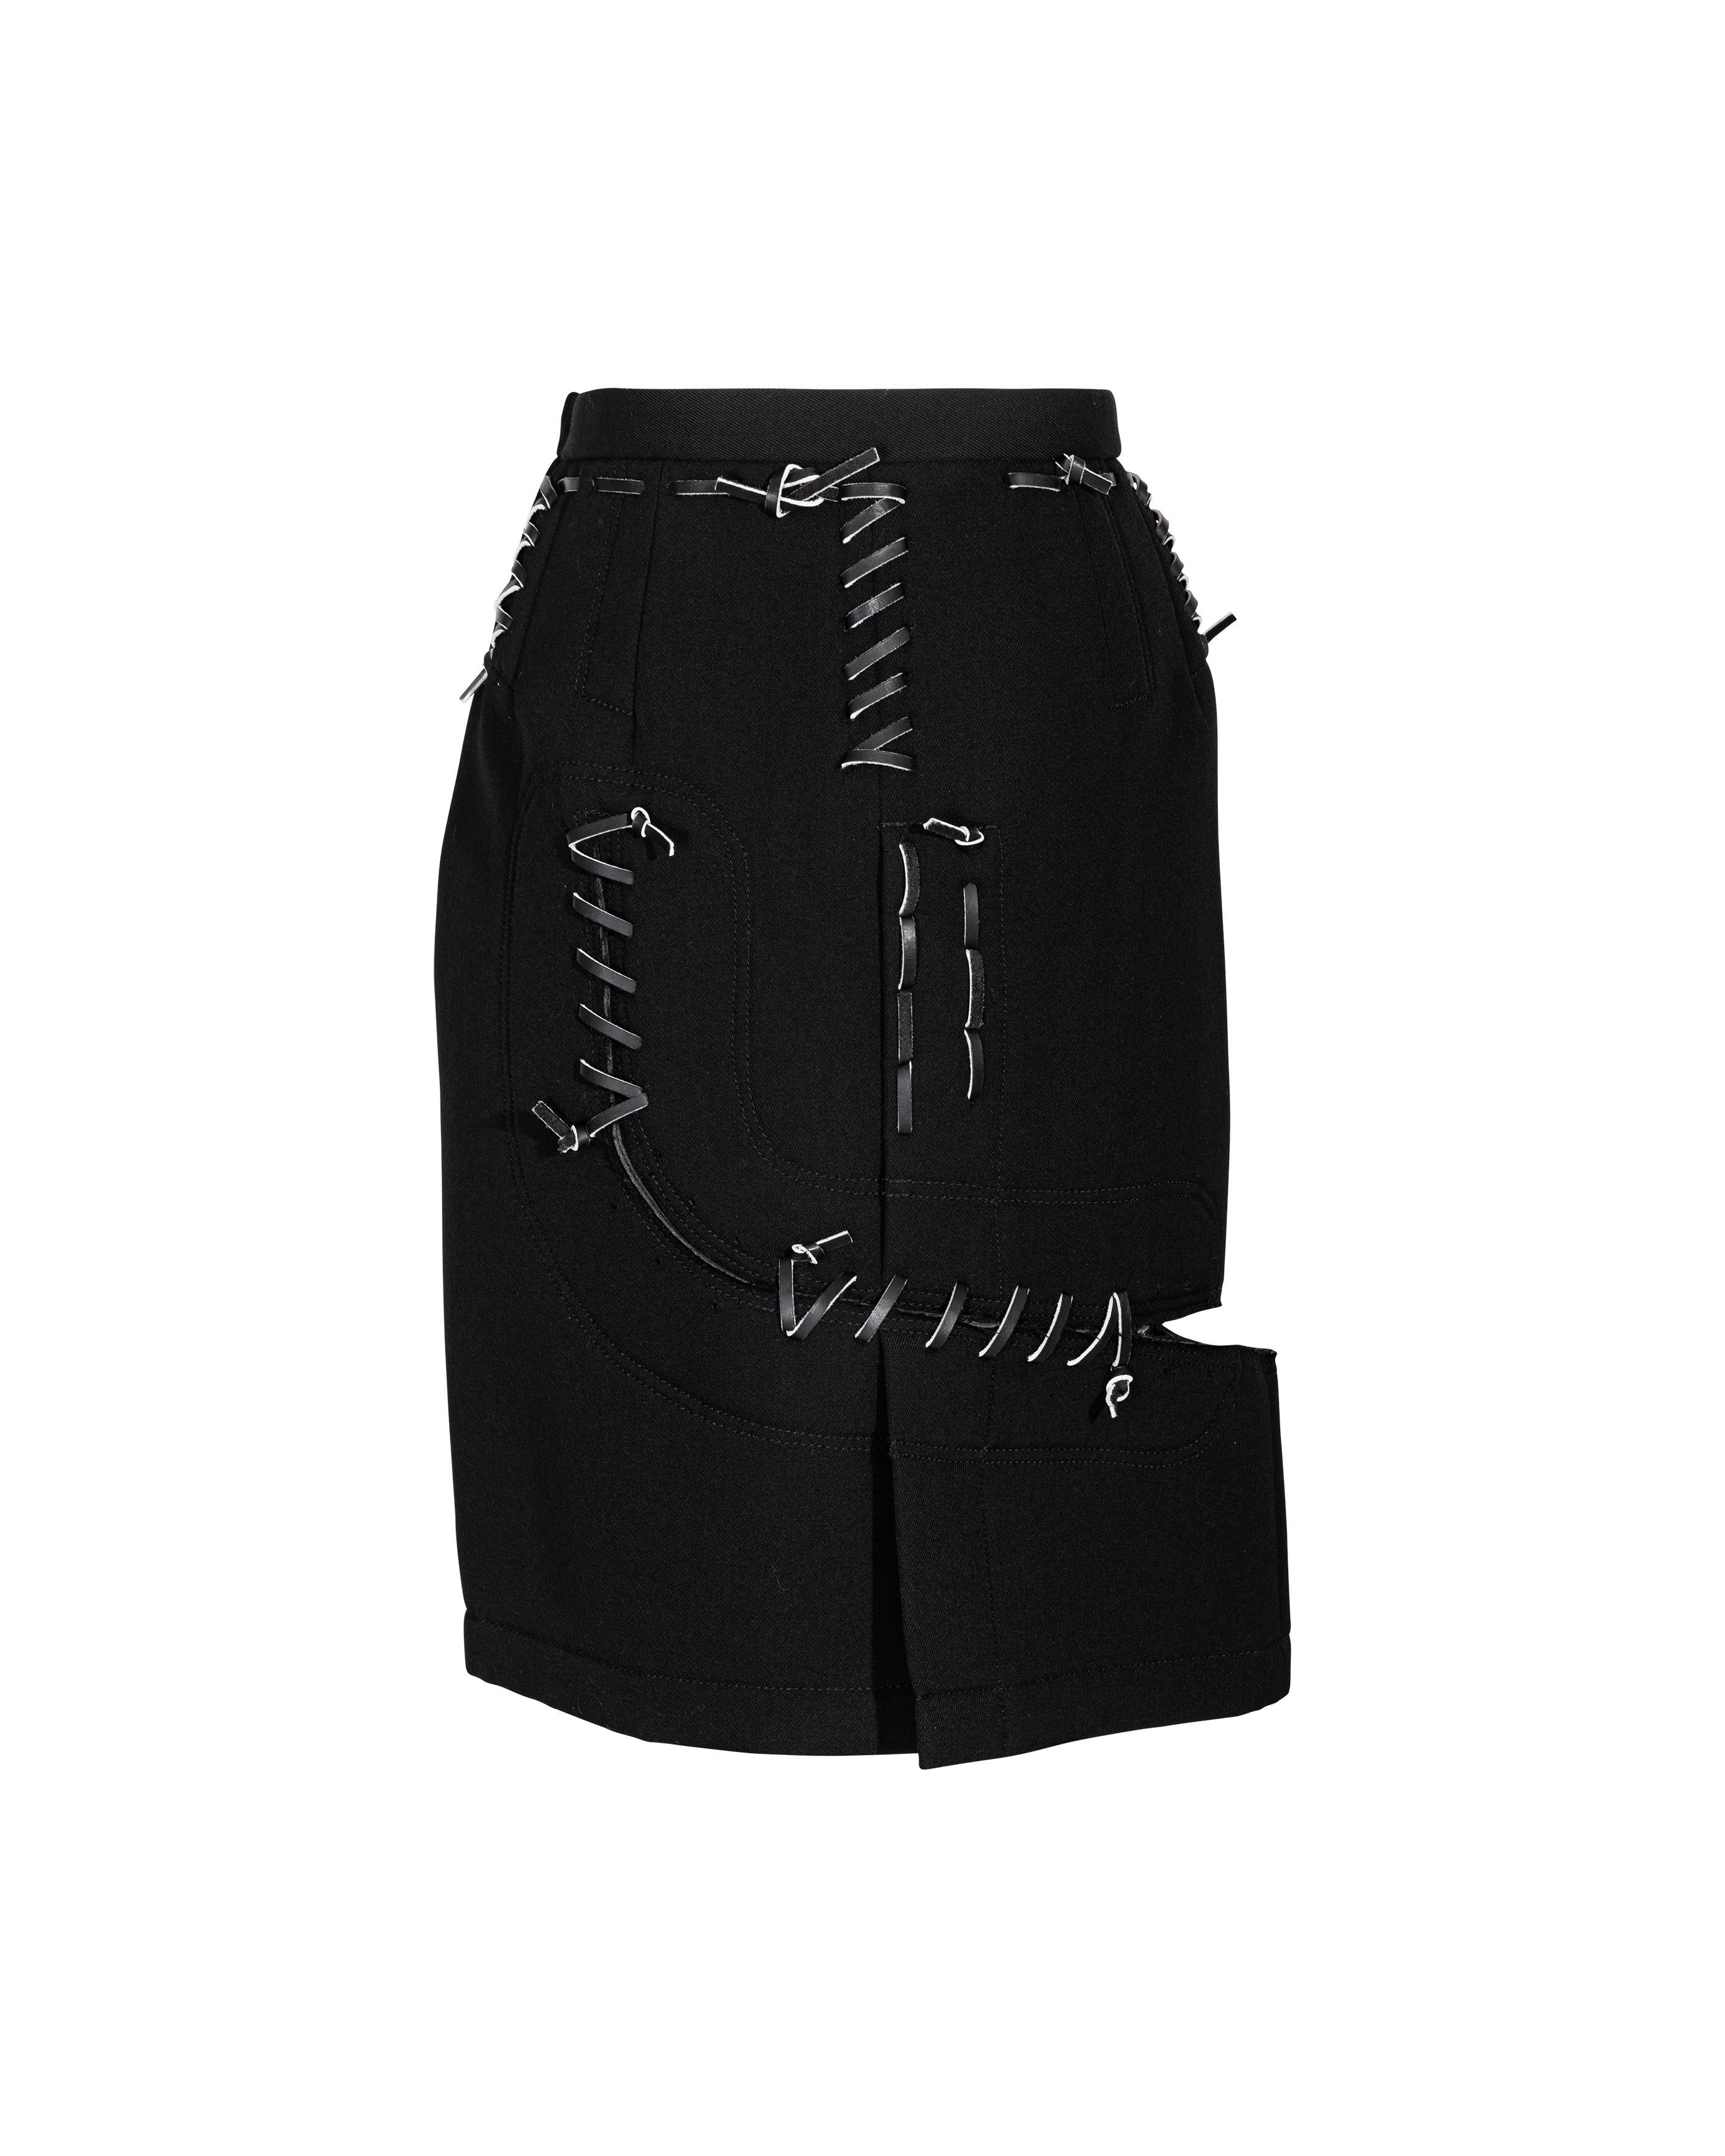 S/S 2005 Comme des Garcons Saddle Stitched Skirt Set For Sale 13